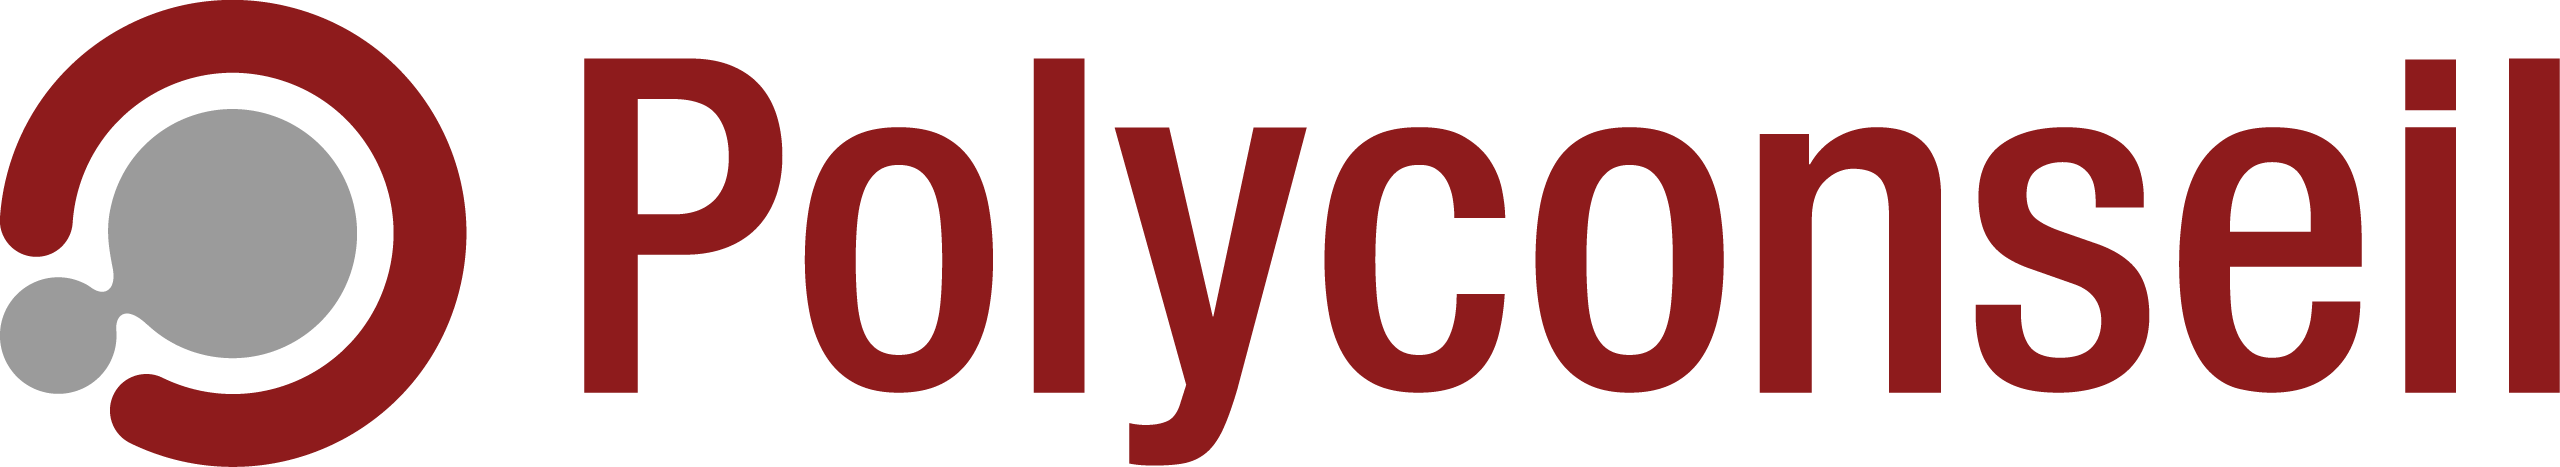 polyconseil logo couleur